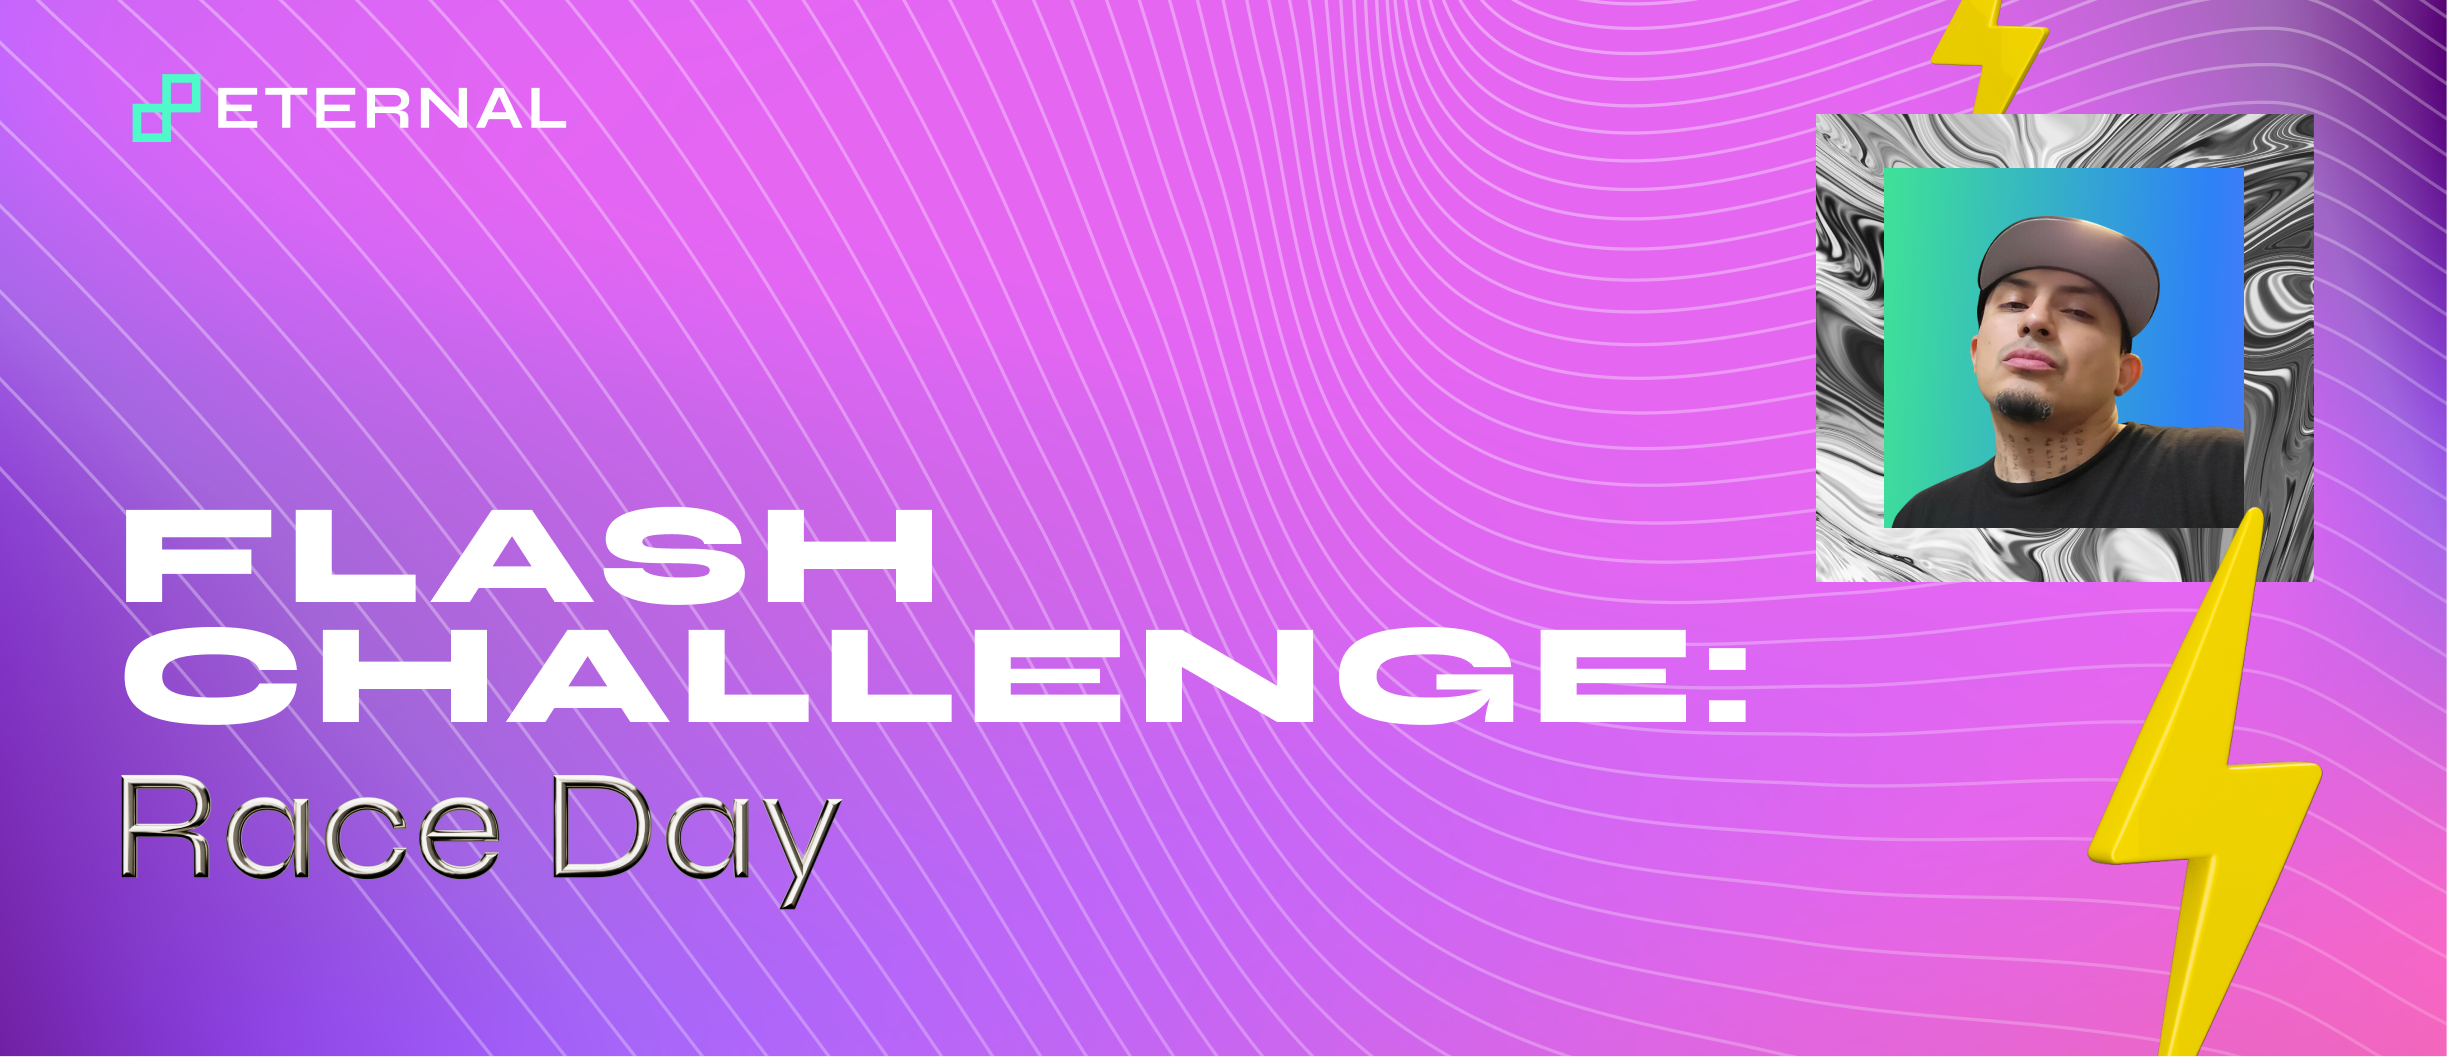 Flash Challenge: Race Day